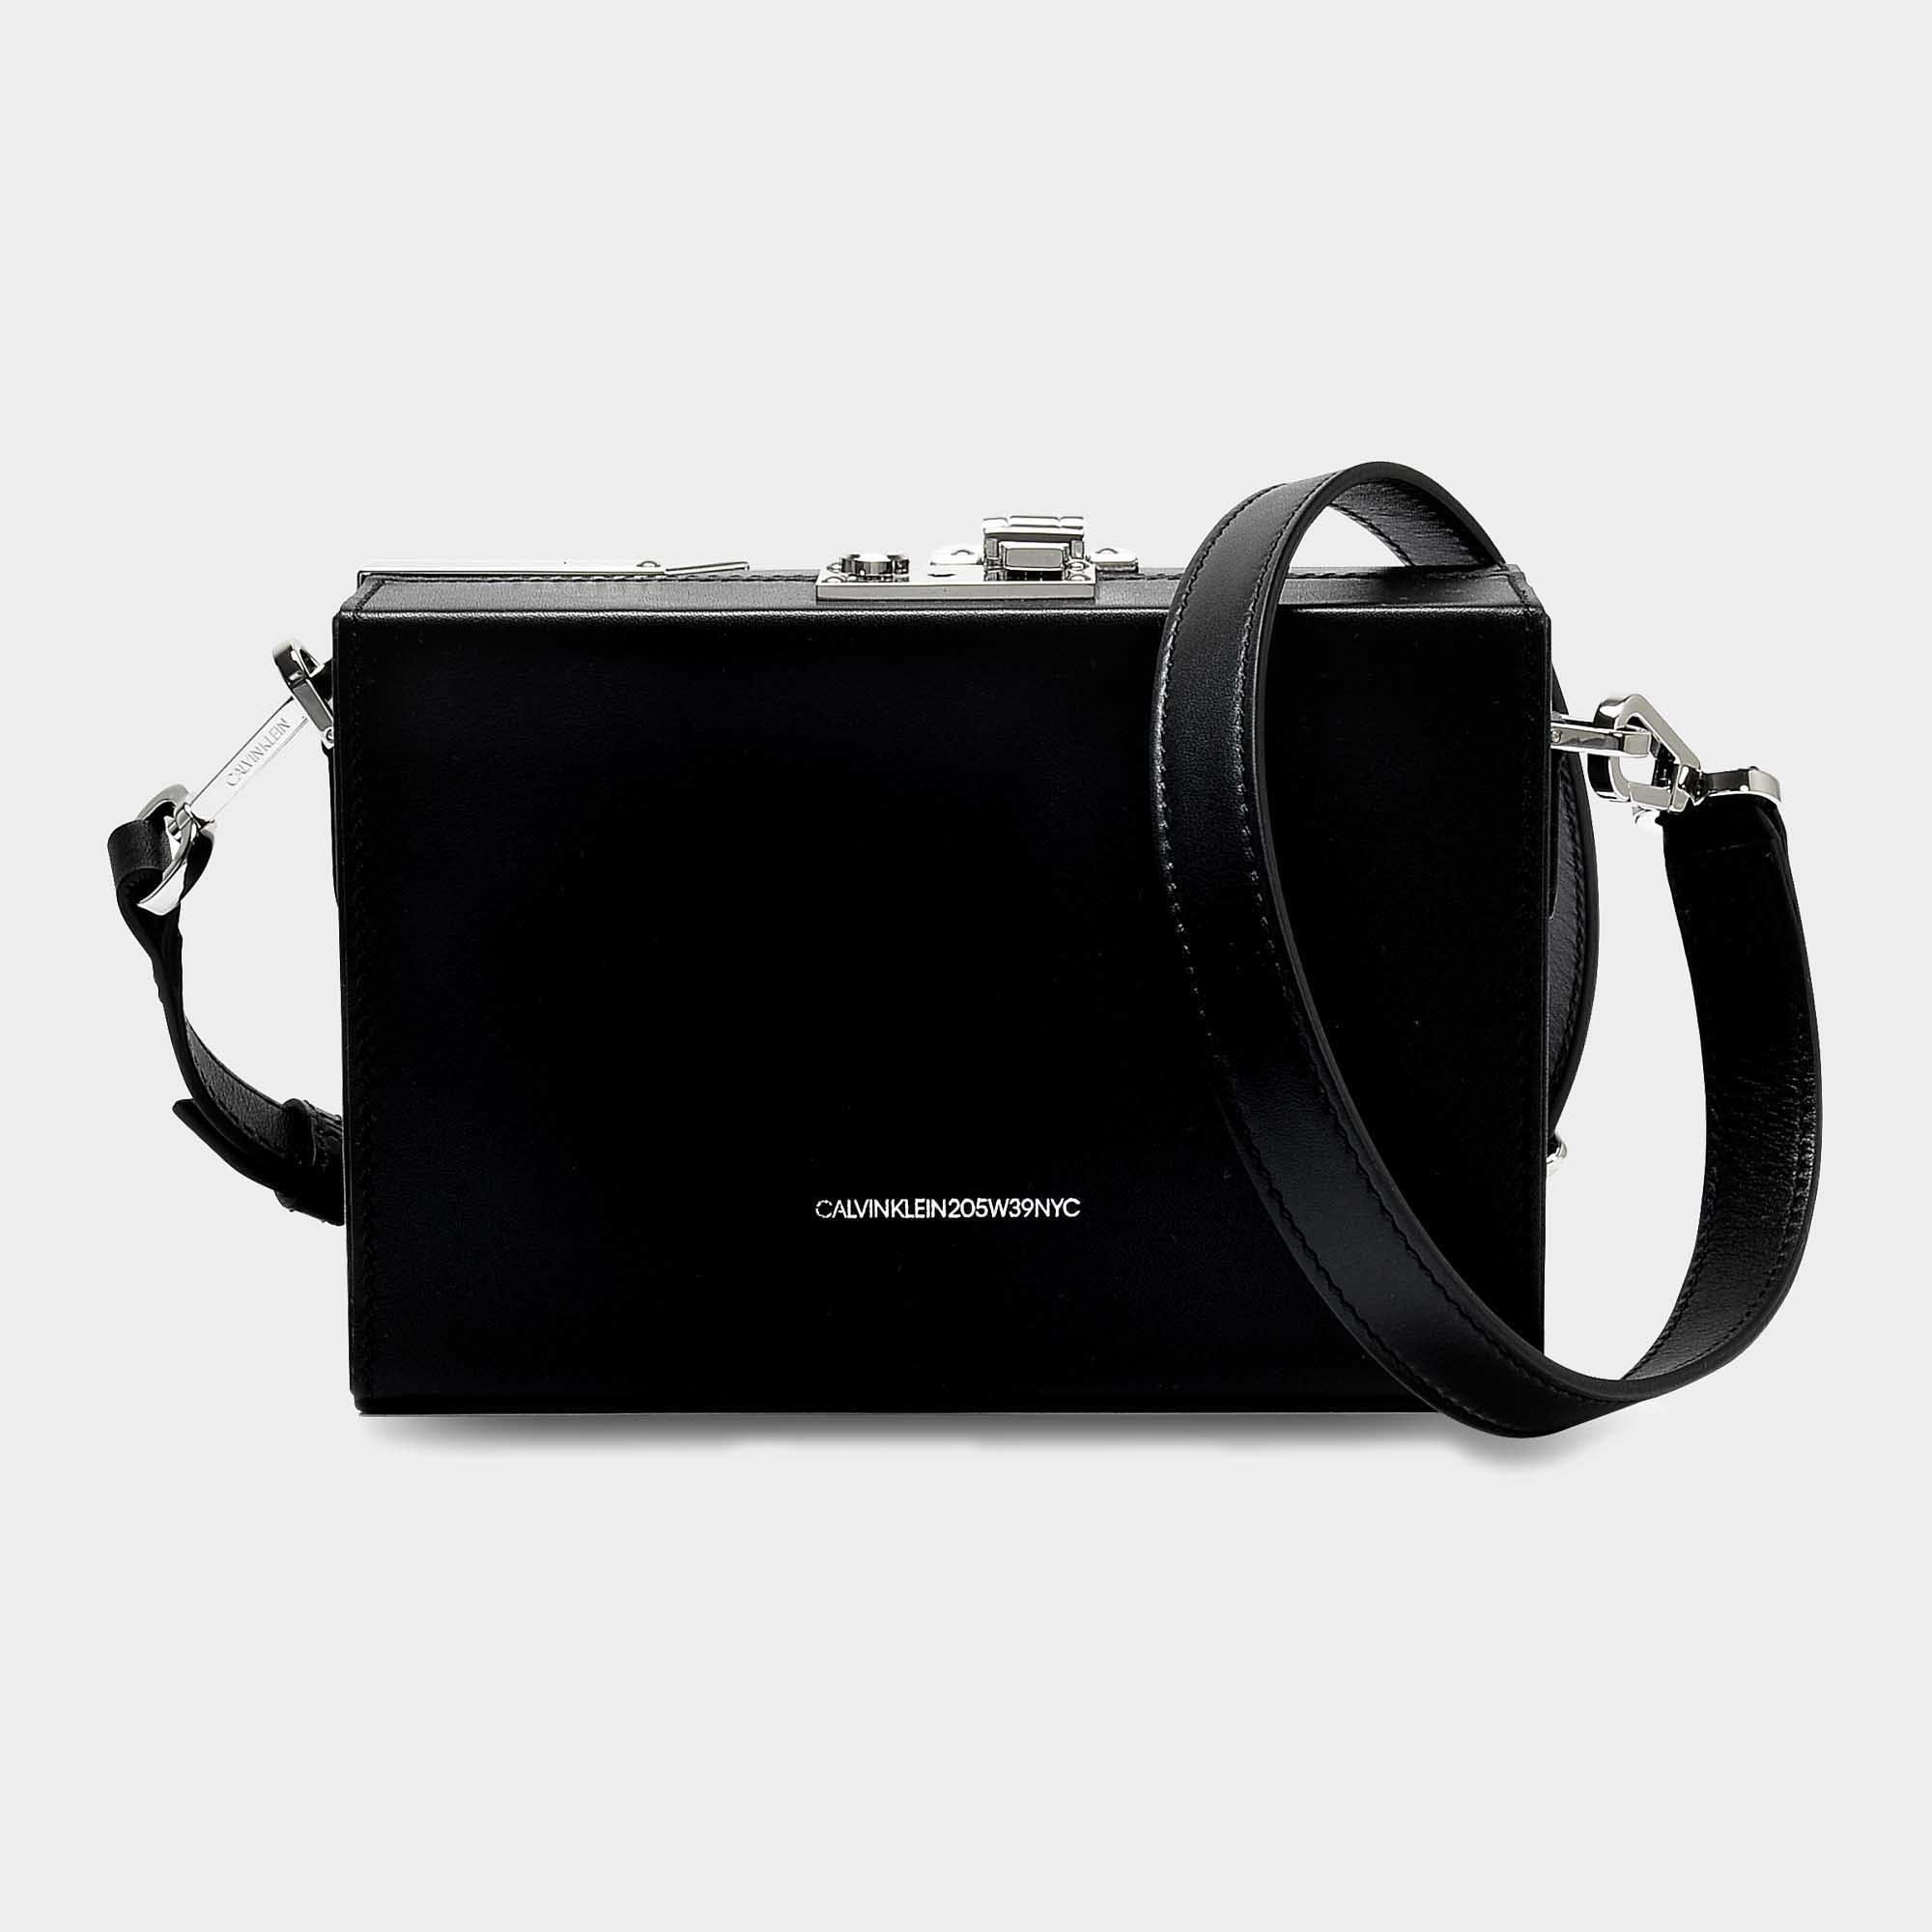 CALVIN KLEIN 205W39NYC Mini Box Shoulder Bag in Black | Lyst